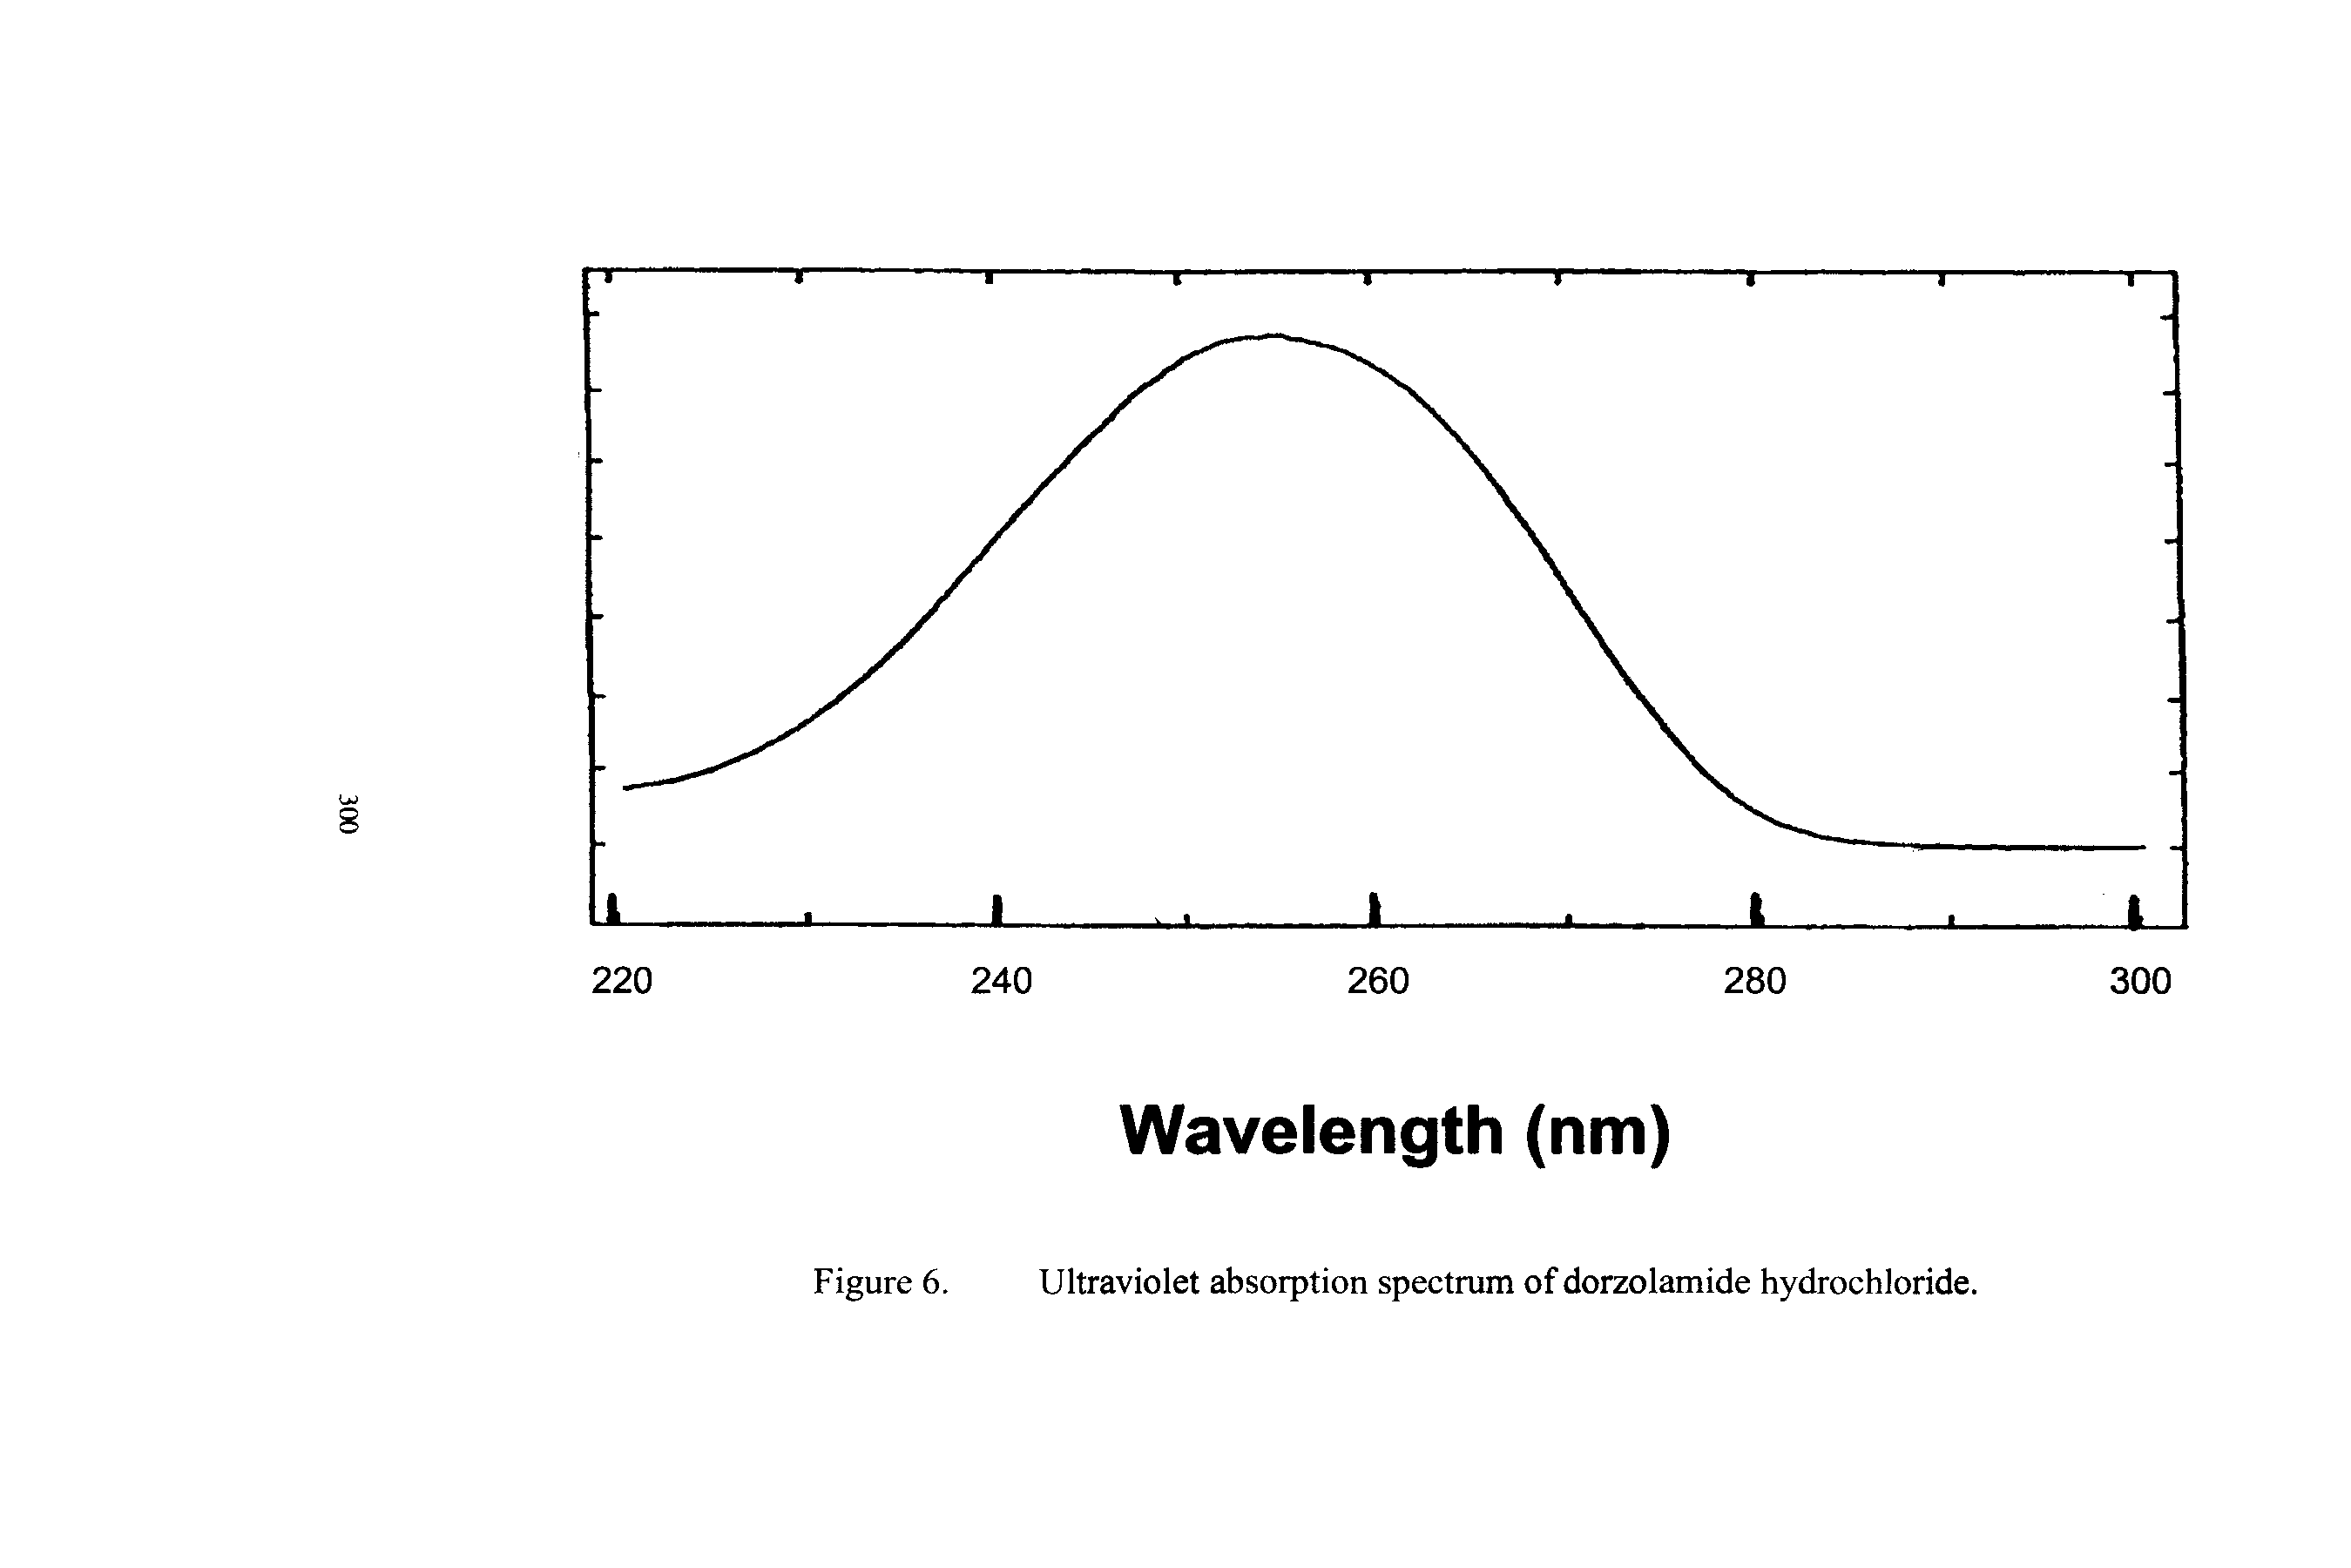 Figure 6. Ultraviolet absorption spectrum of dorzolamide hydrochloride.